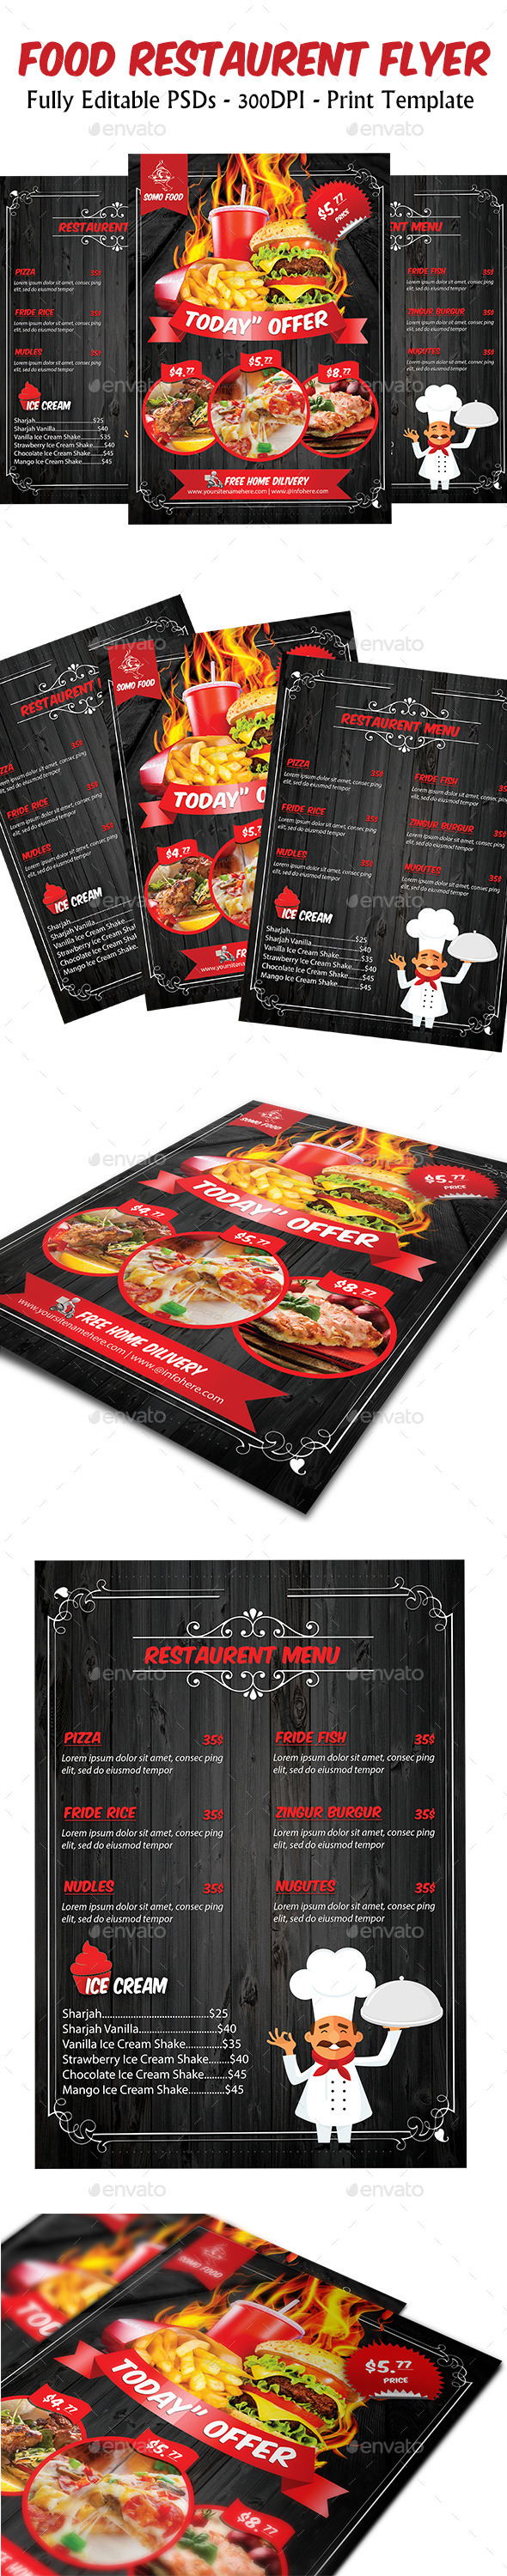 Food Restaurant Flyer & menu template